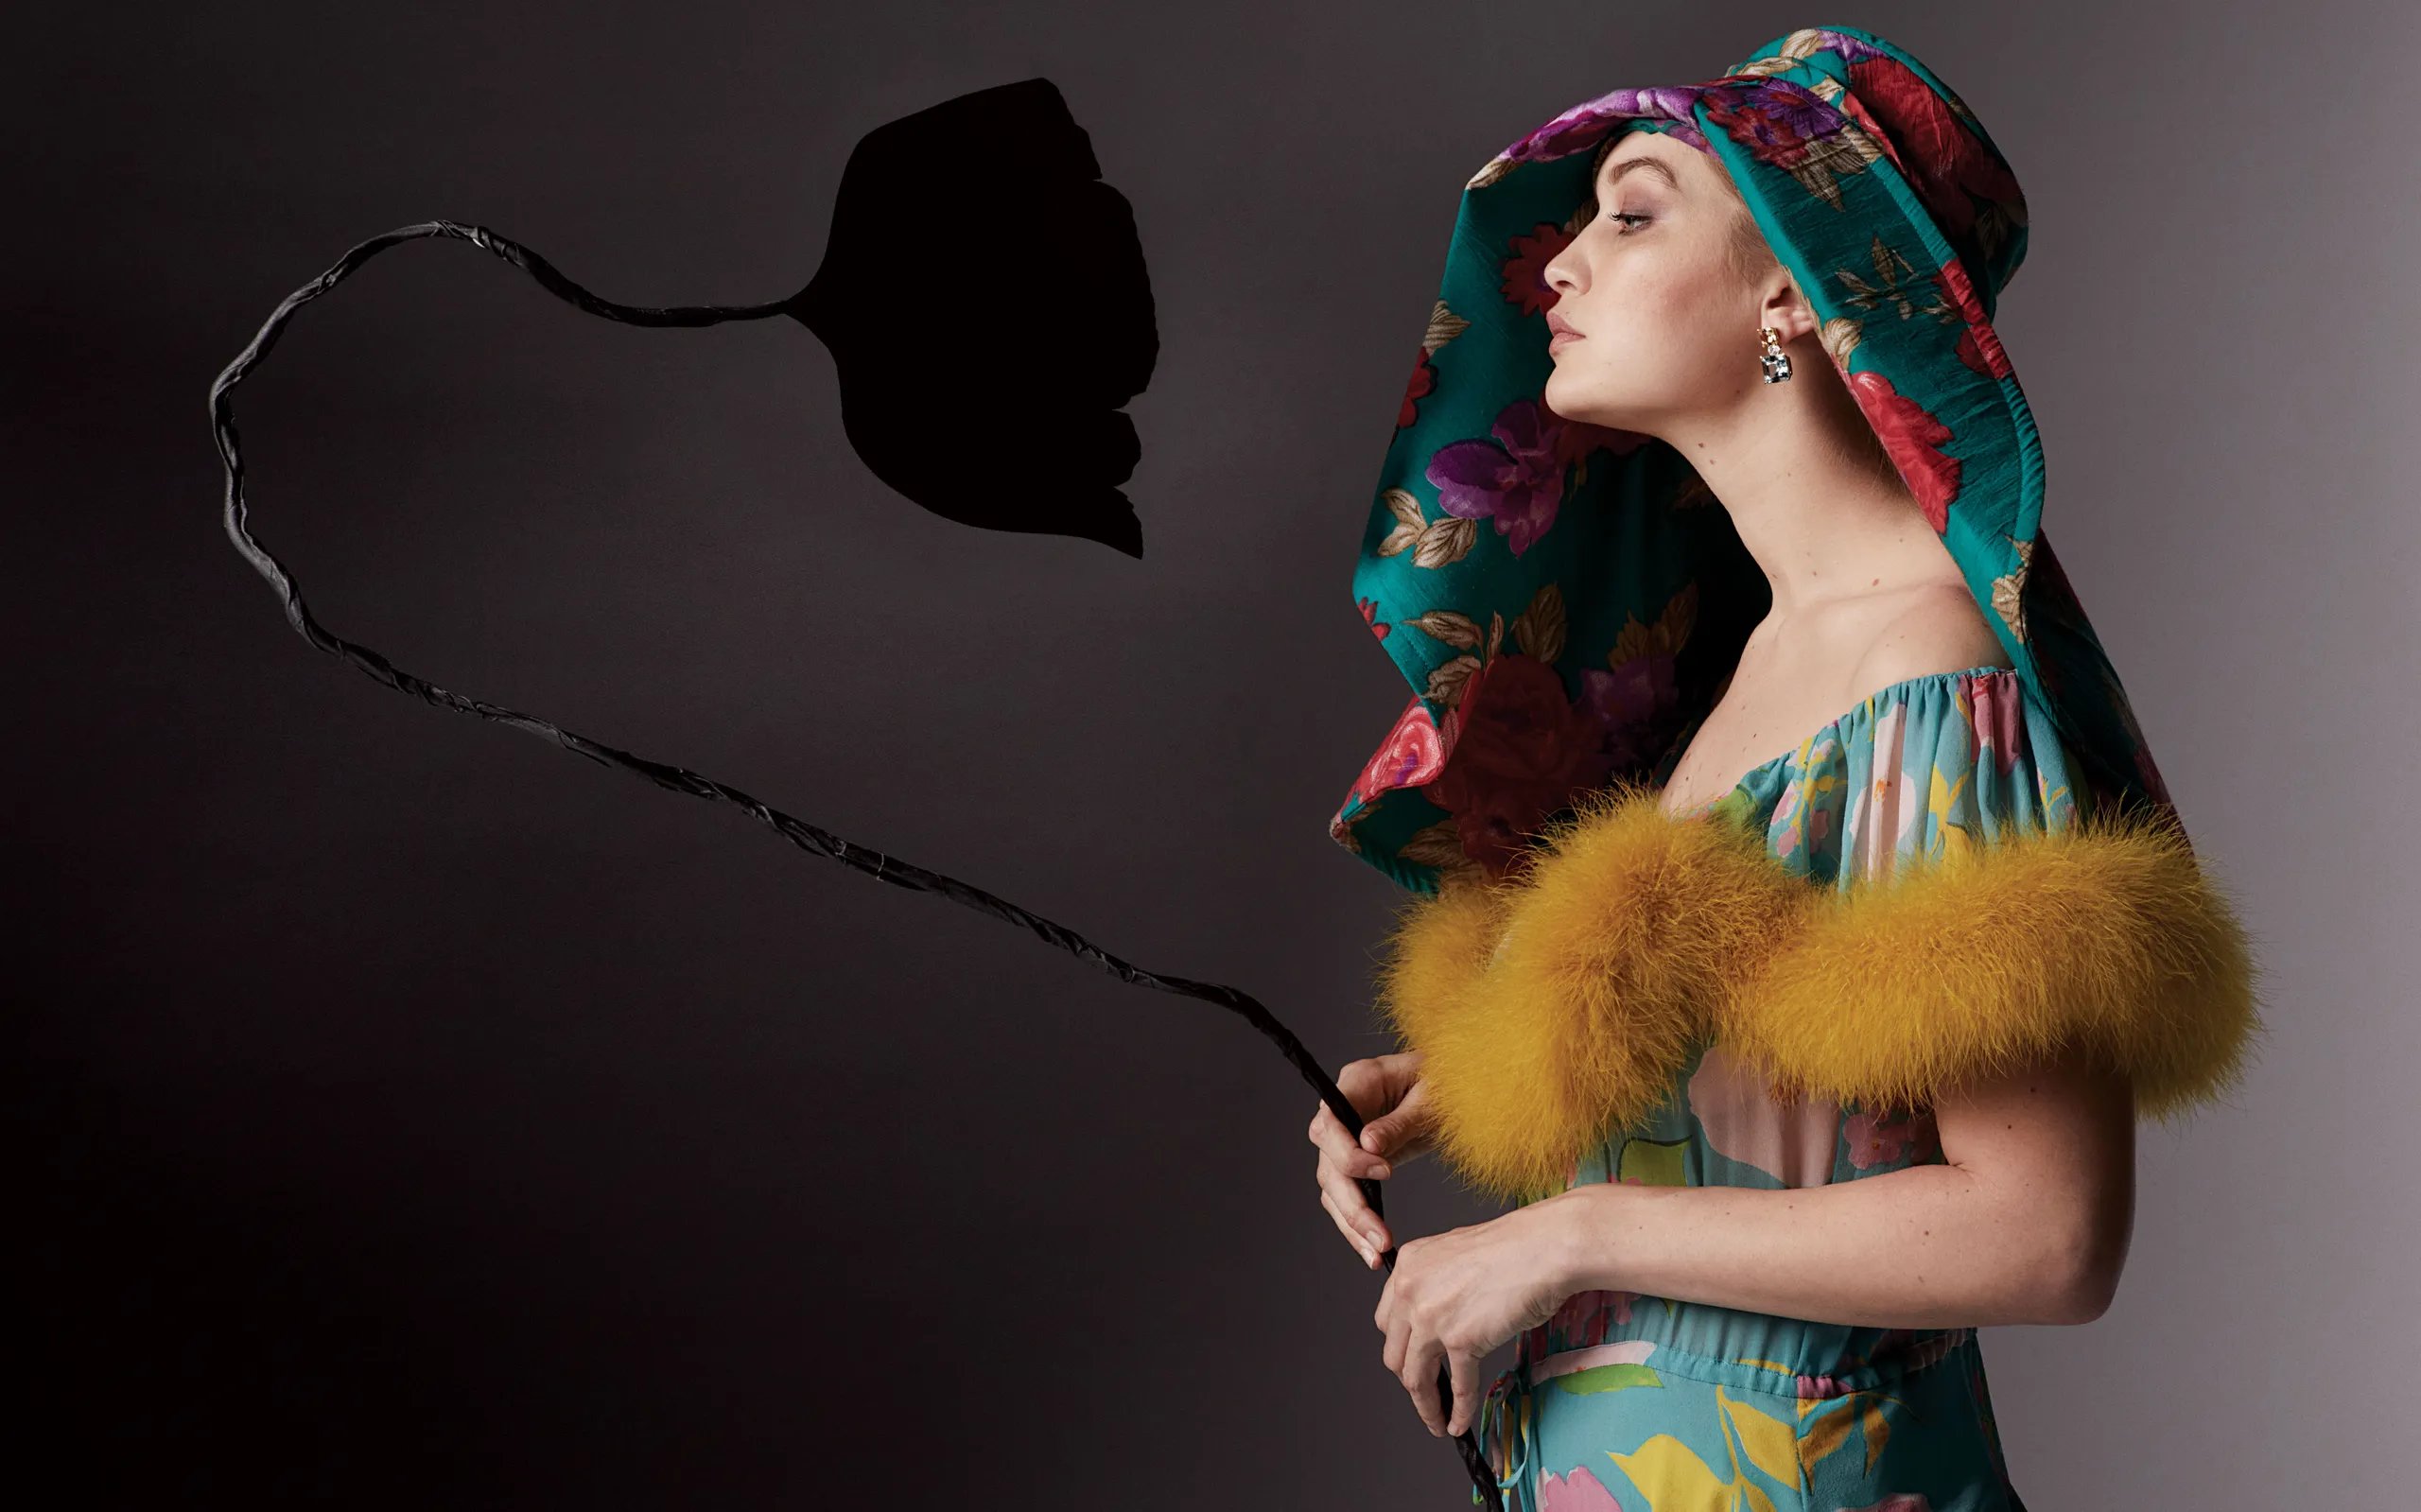 Fotos n°3 : Gigi Hadid est de vuelta en Vogue!